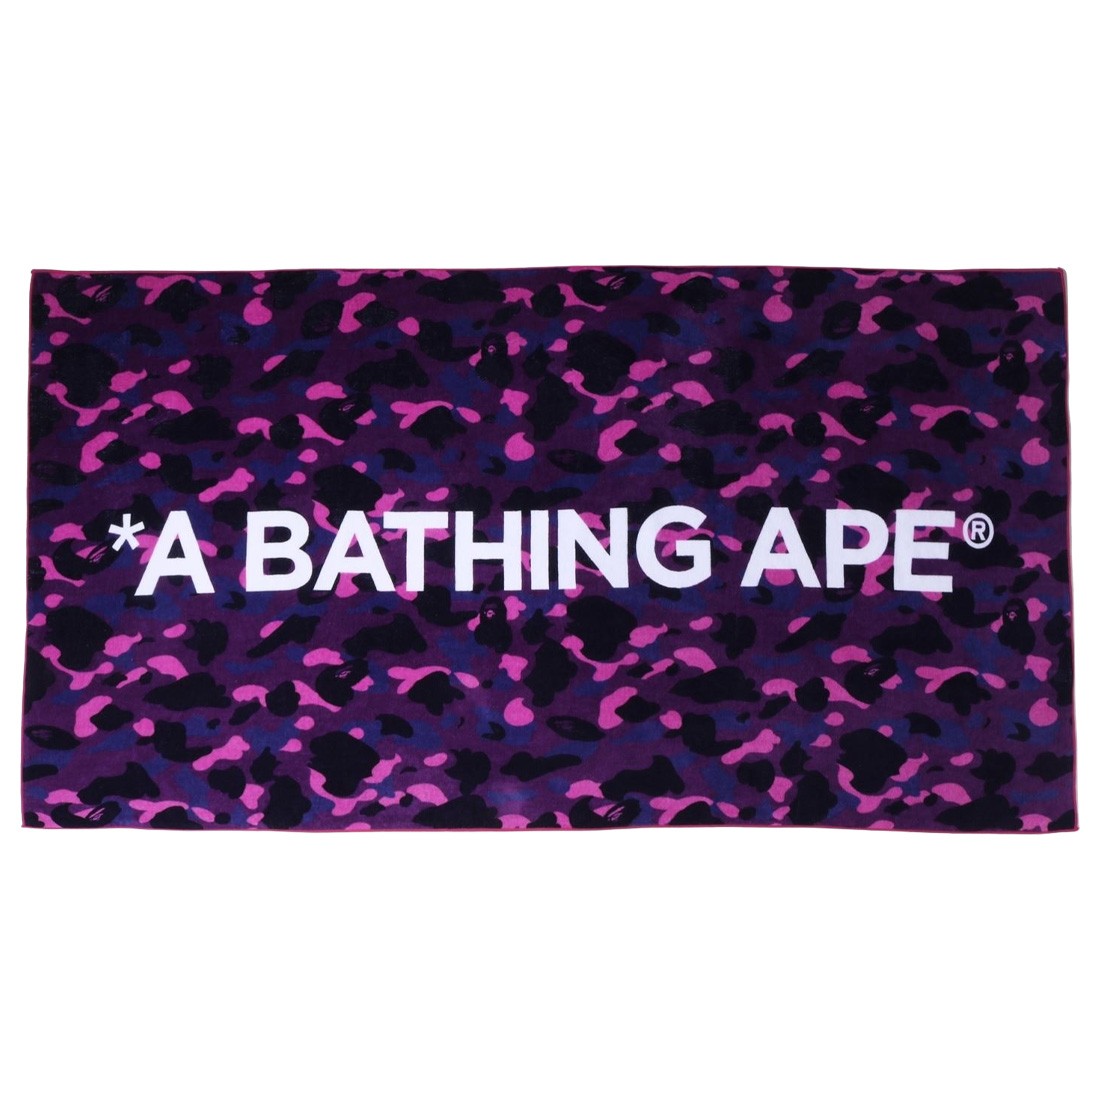 A Bathing Ape Color Camo Beach Towel (purple)